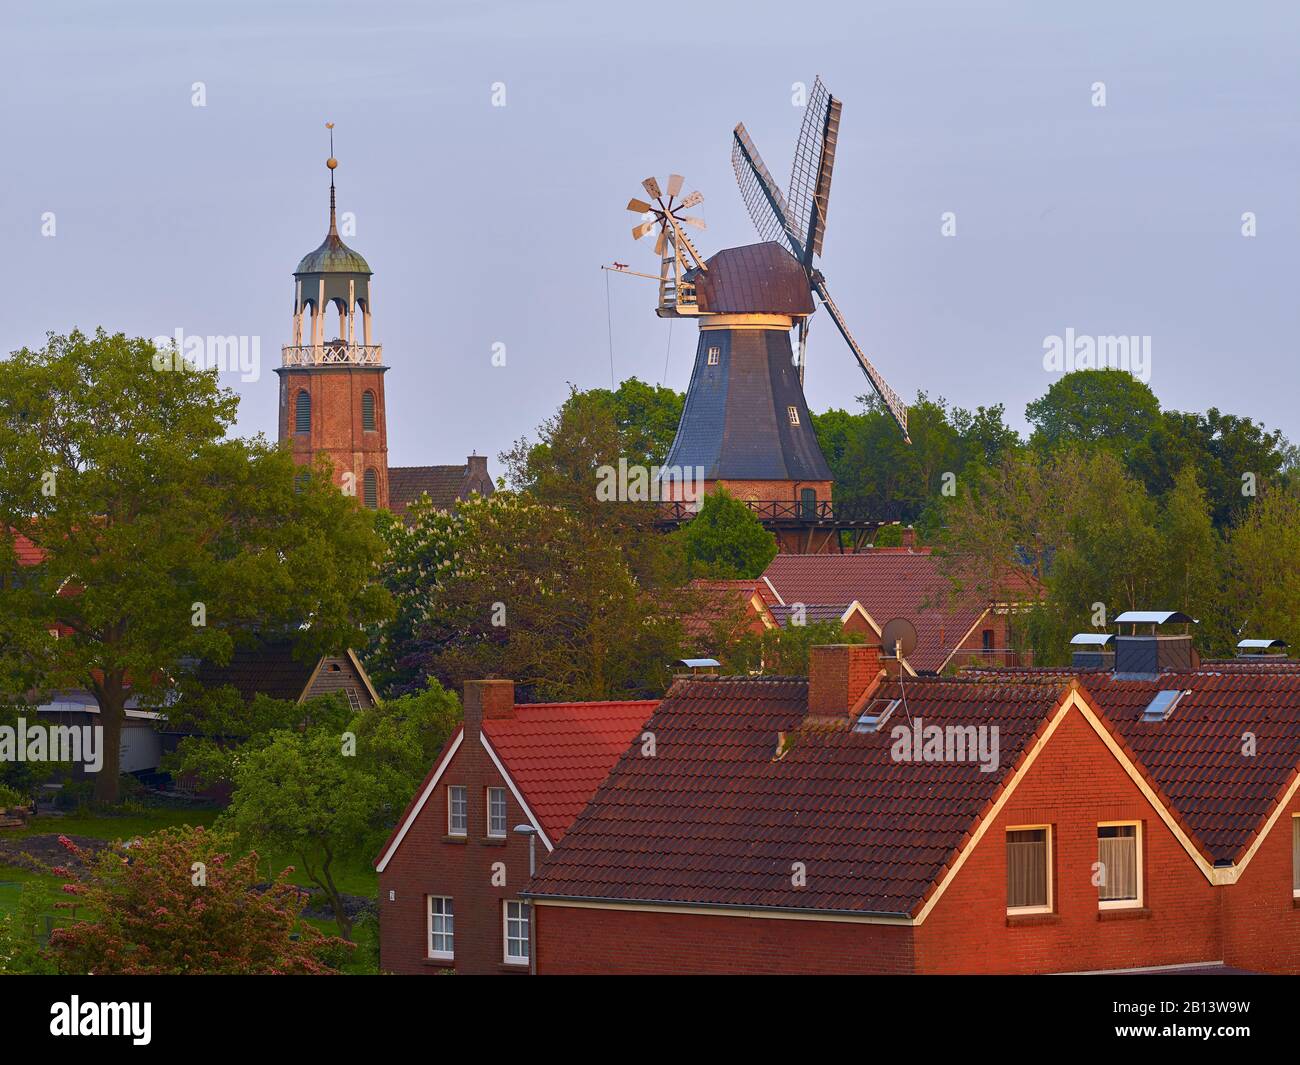 Chiesa torre e mulino di Ditzum, Jemgum, Frisia orientale, Bassa Sassonia, Germania Foto Stock